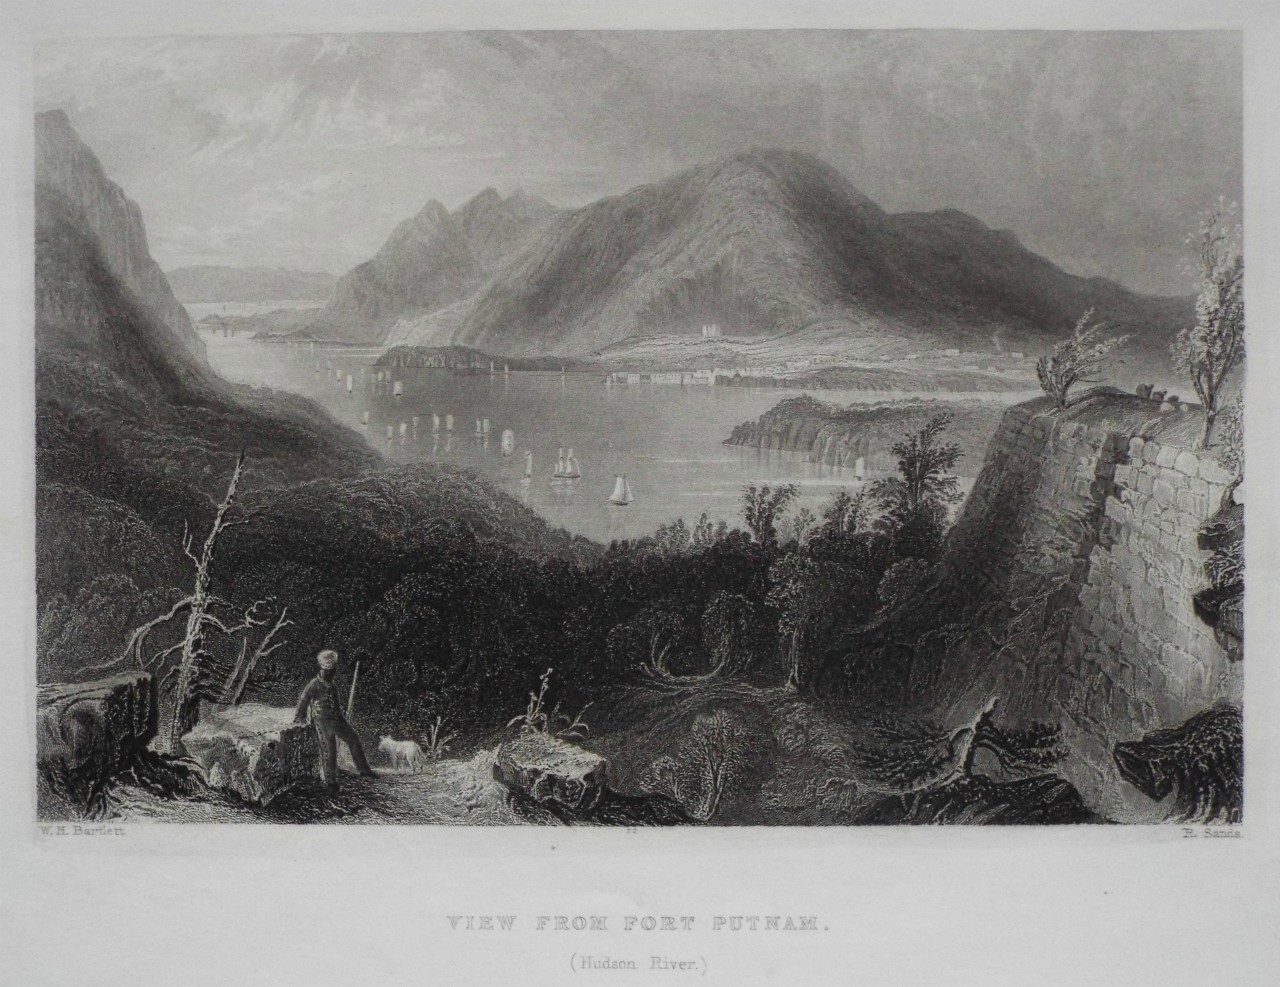 Print - View from Fort Putnam. (Hudson River) - Sands